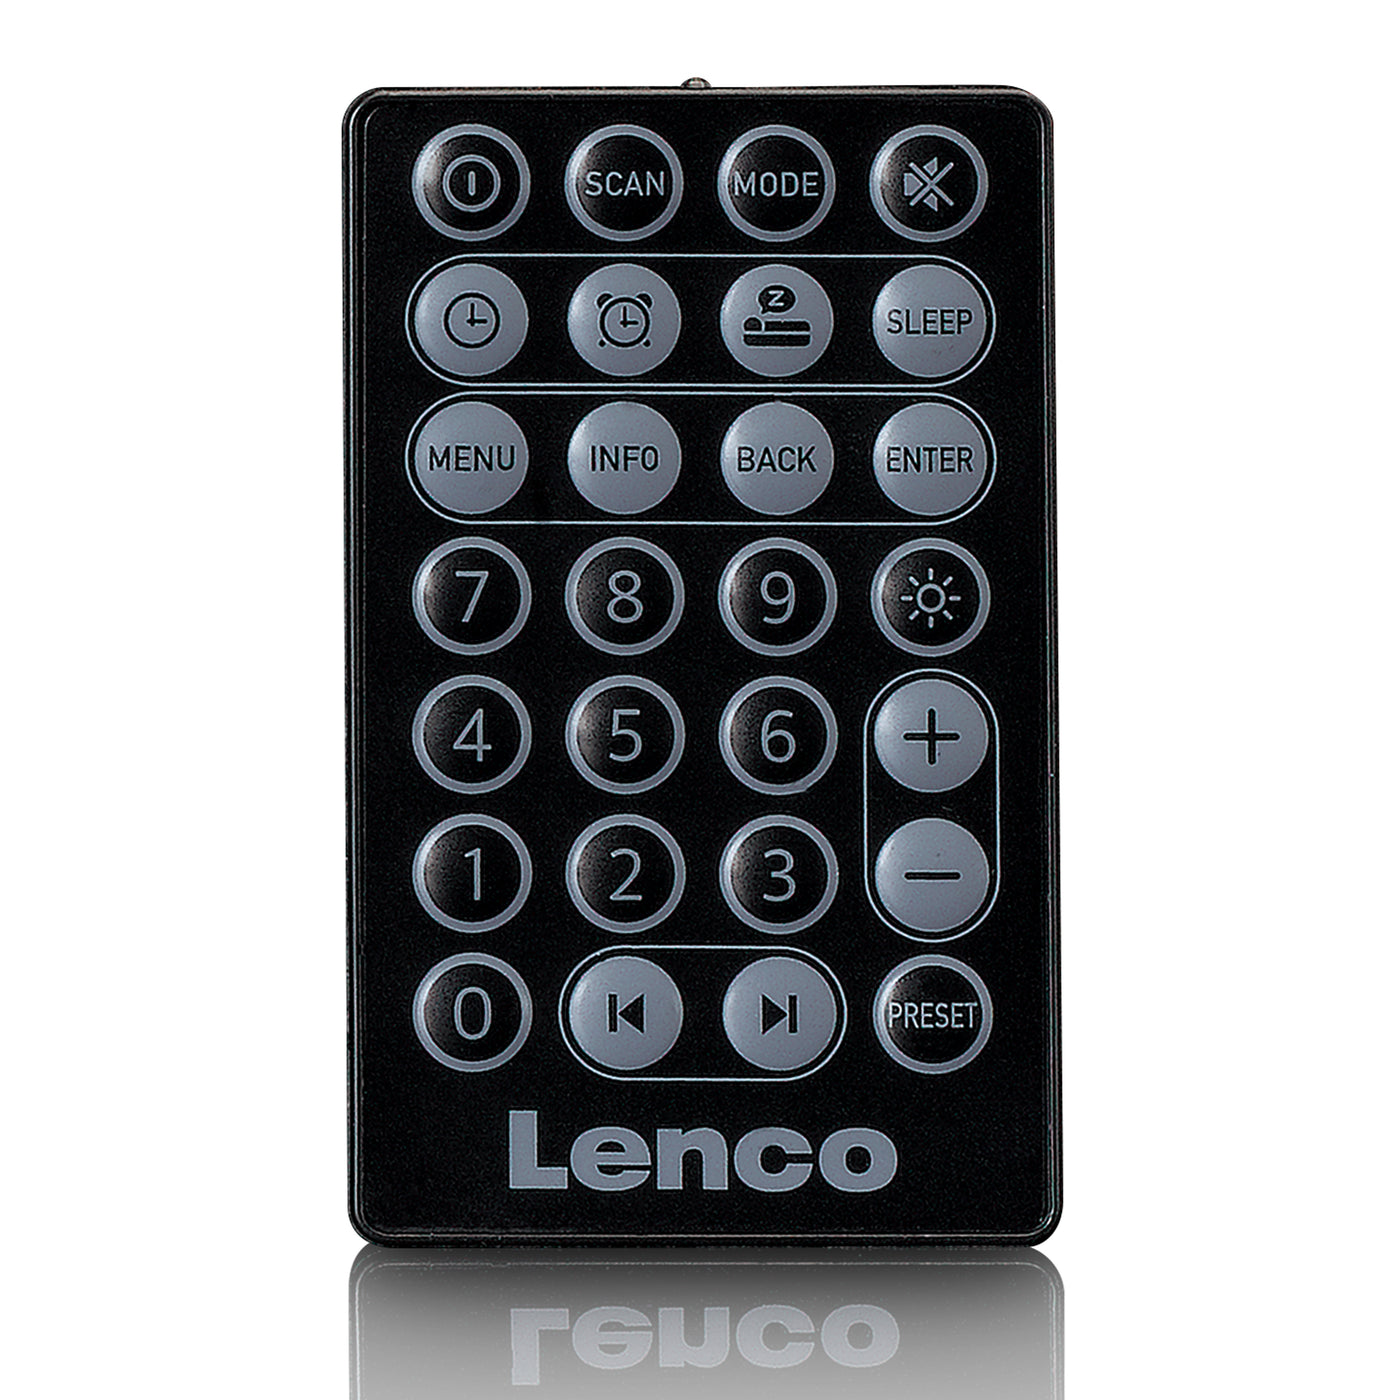 Portable AUX-inp with Bluetooth® LENCO PDR-051BKSI Lenco-Catalog and Radio – - FM DAB+